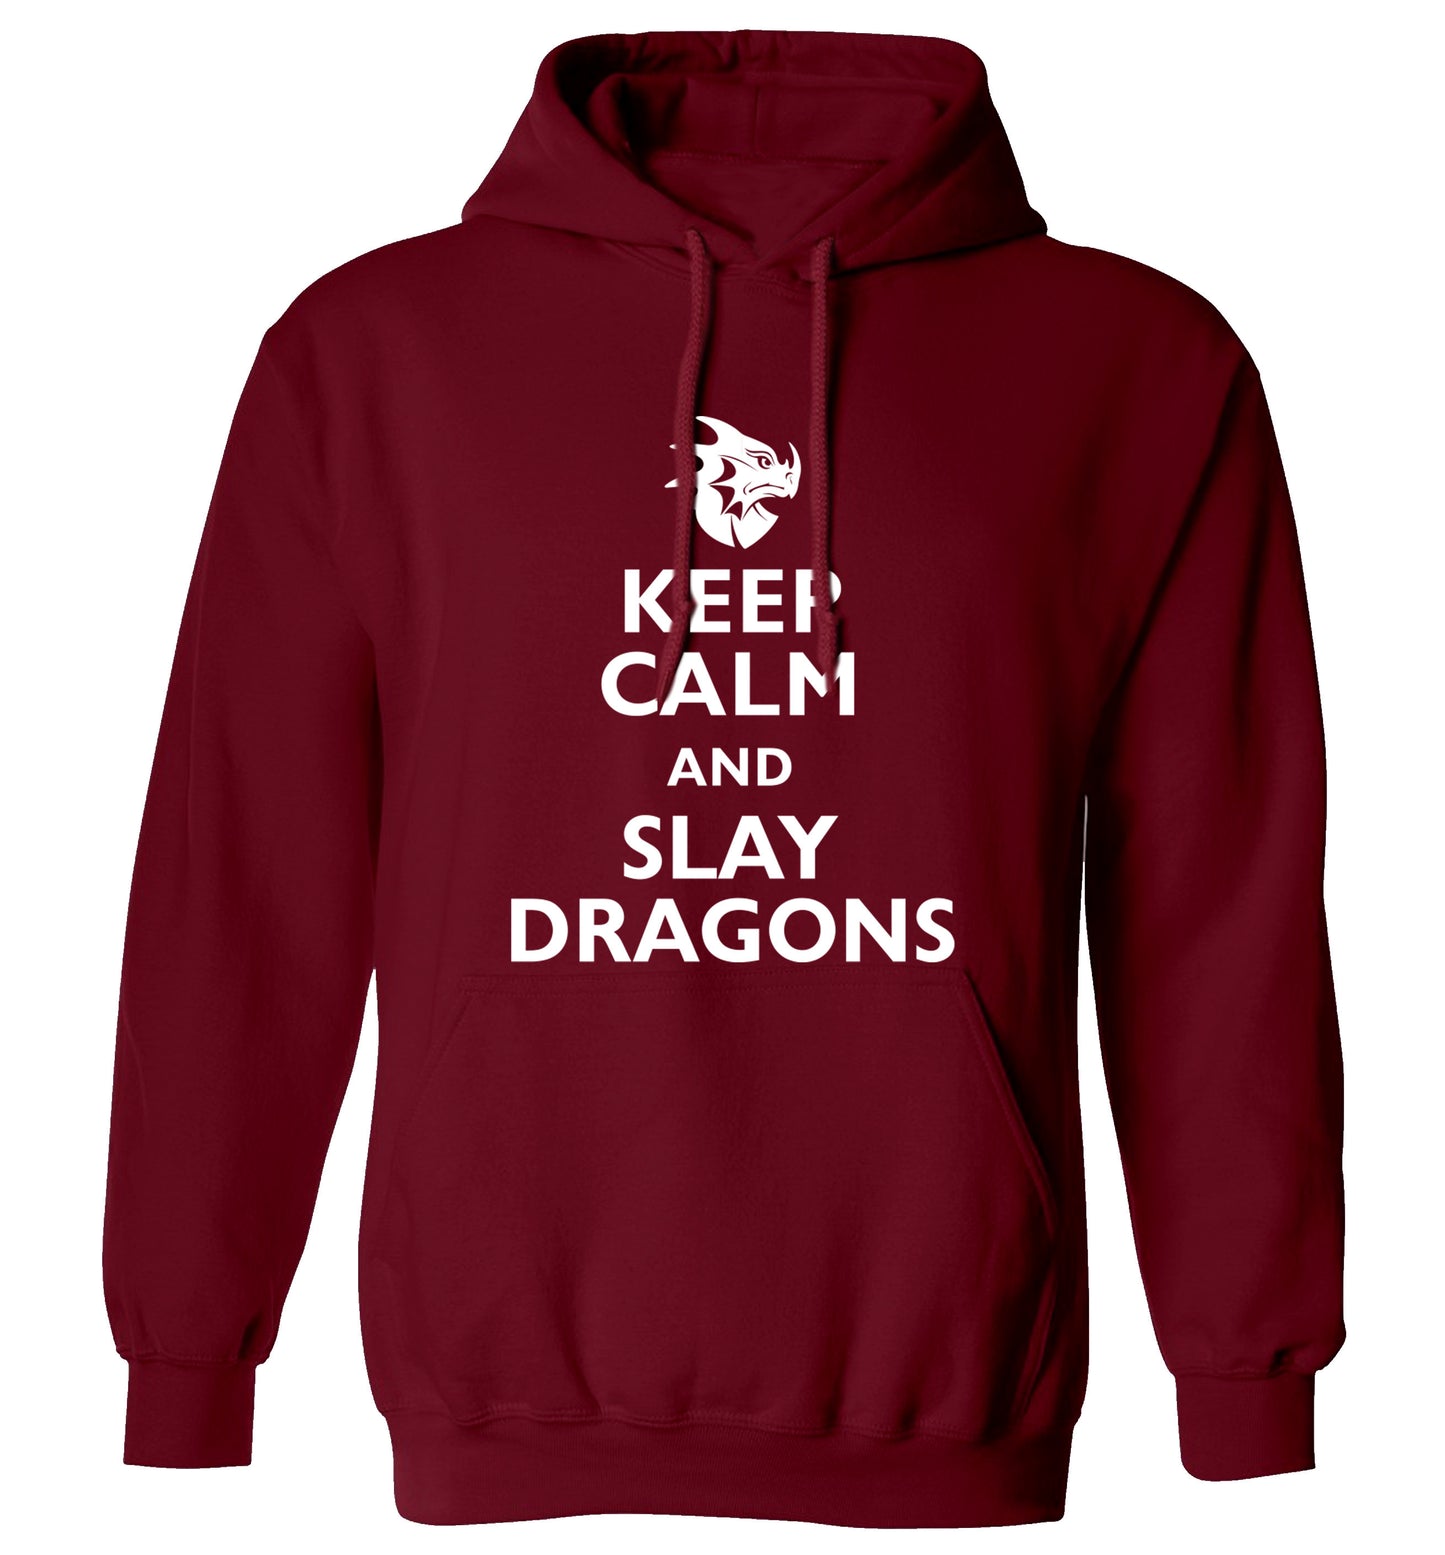 Keep calm and slay dragons adults unisex maroon hoodie 2XL